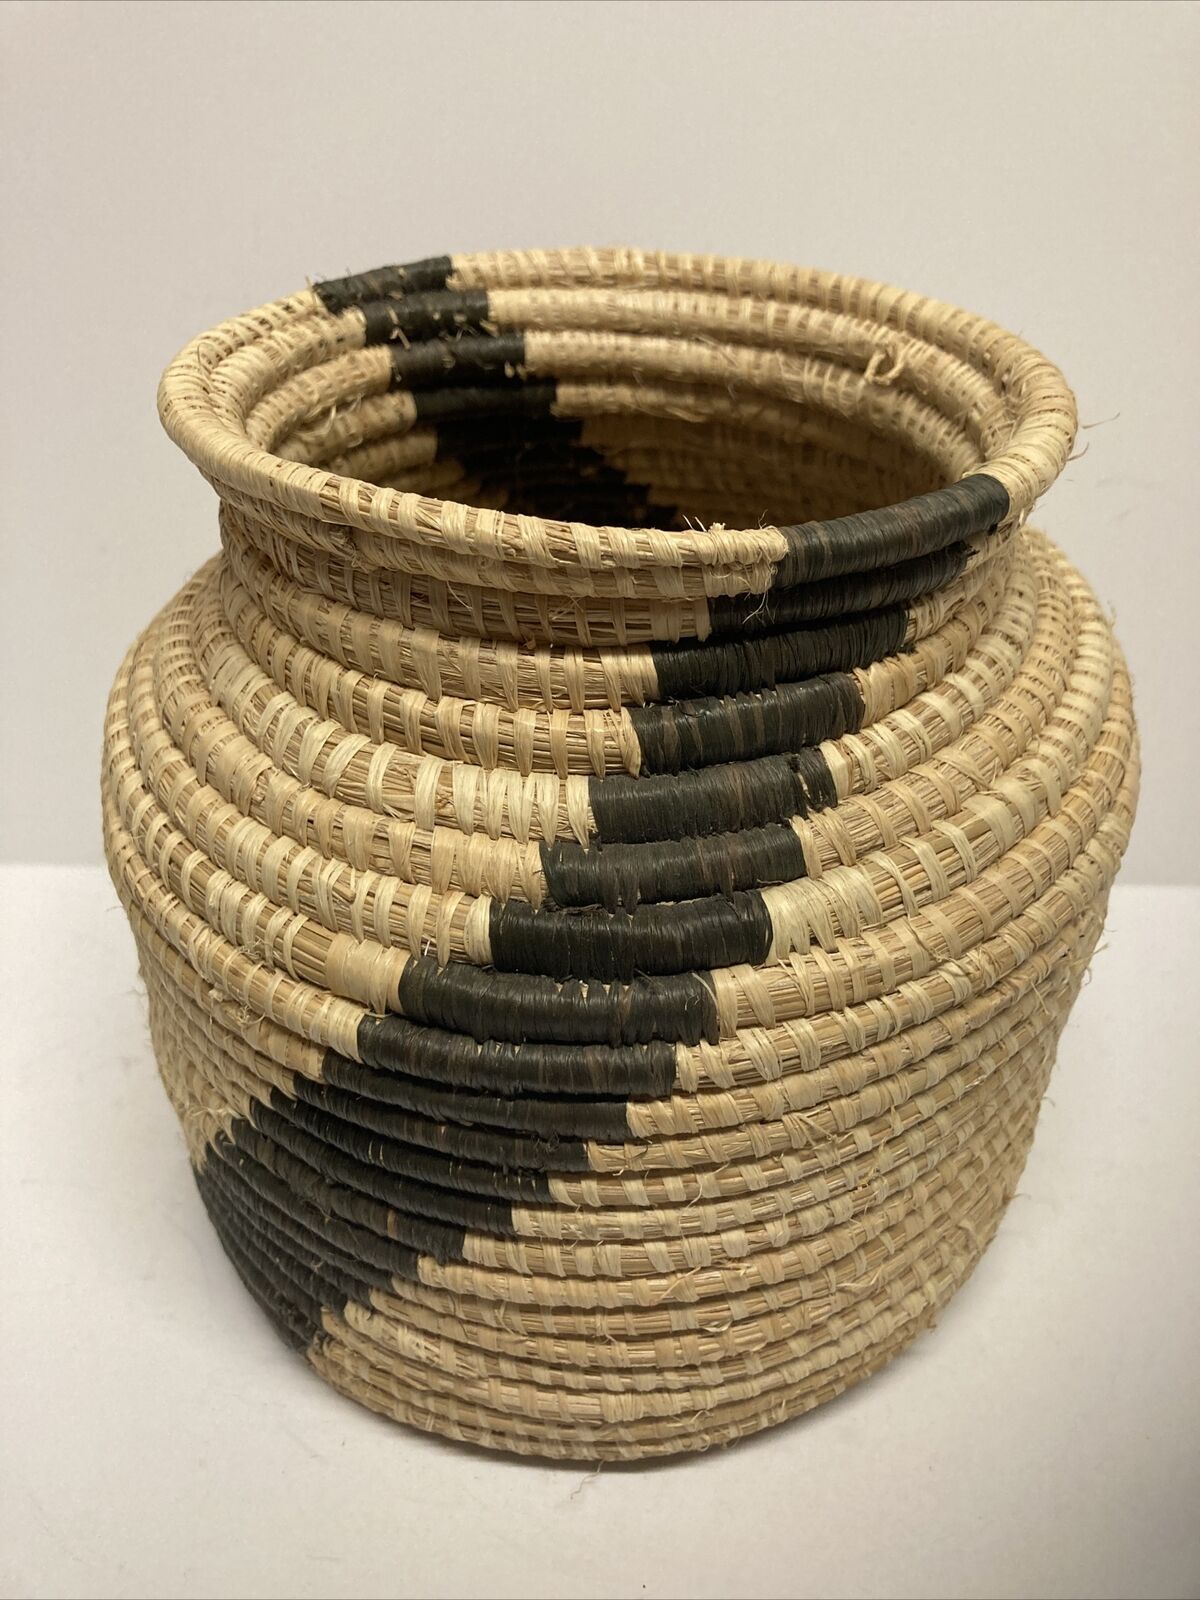 BEAUTIFUL Native America Spiral Basket Basketry 7” Tall x 7” Wide x 5” Diameter